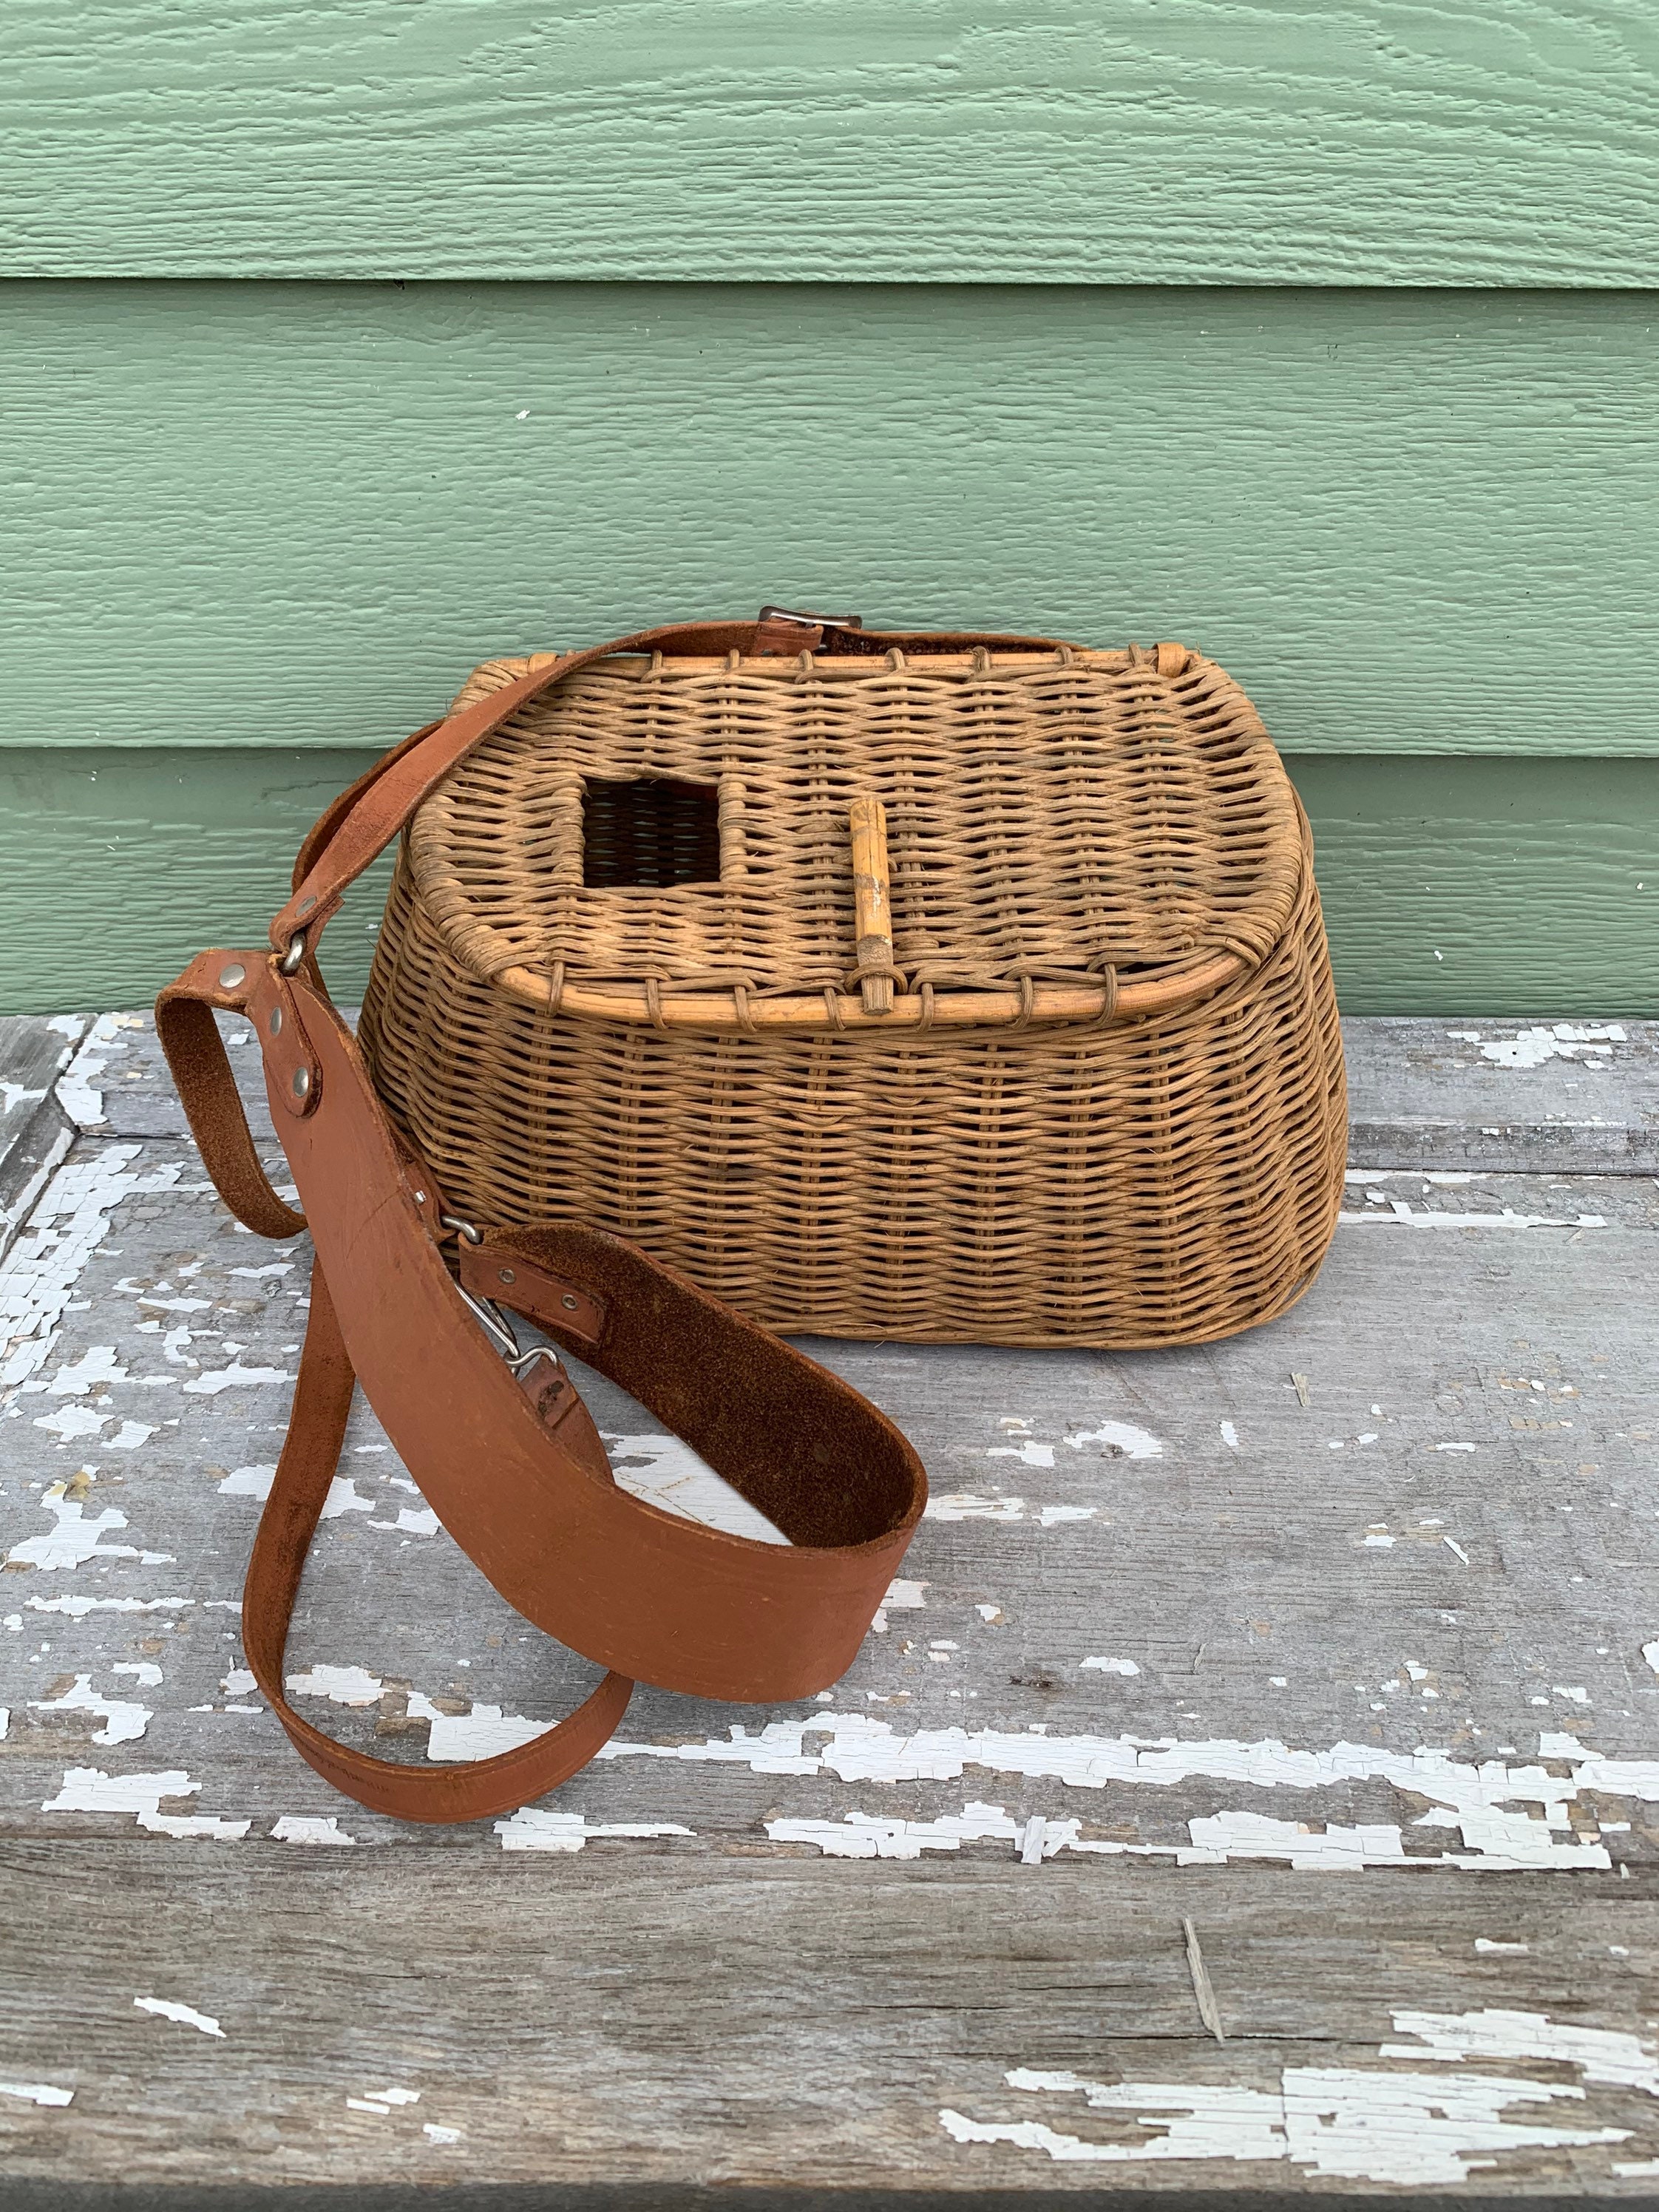 Vintage LL Bean Wicker & Leather Fishing Creel Basket w/Strap